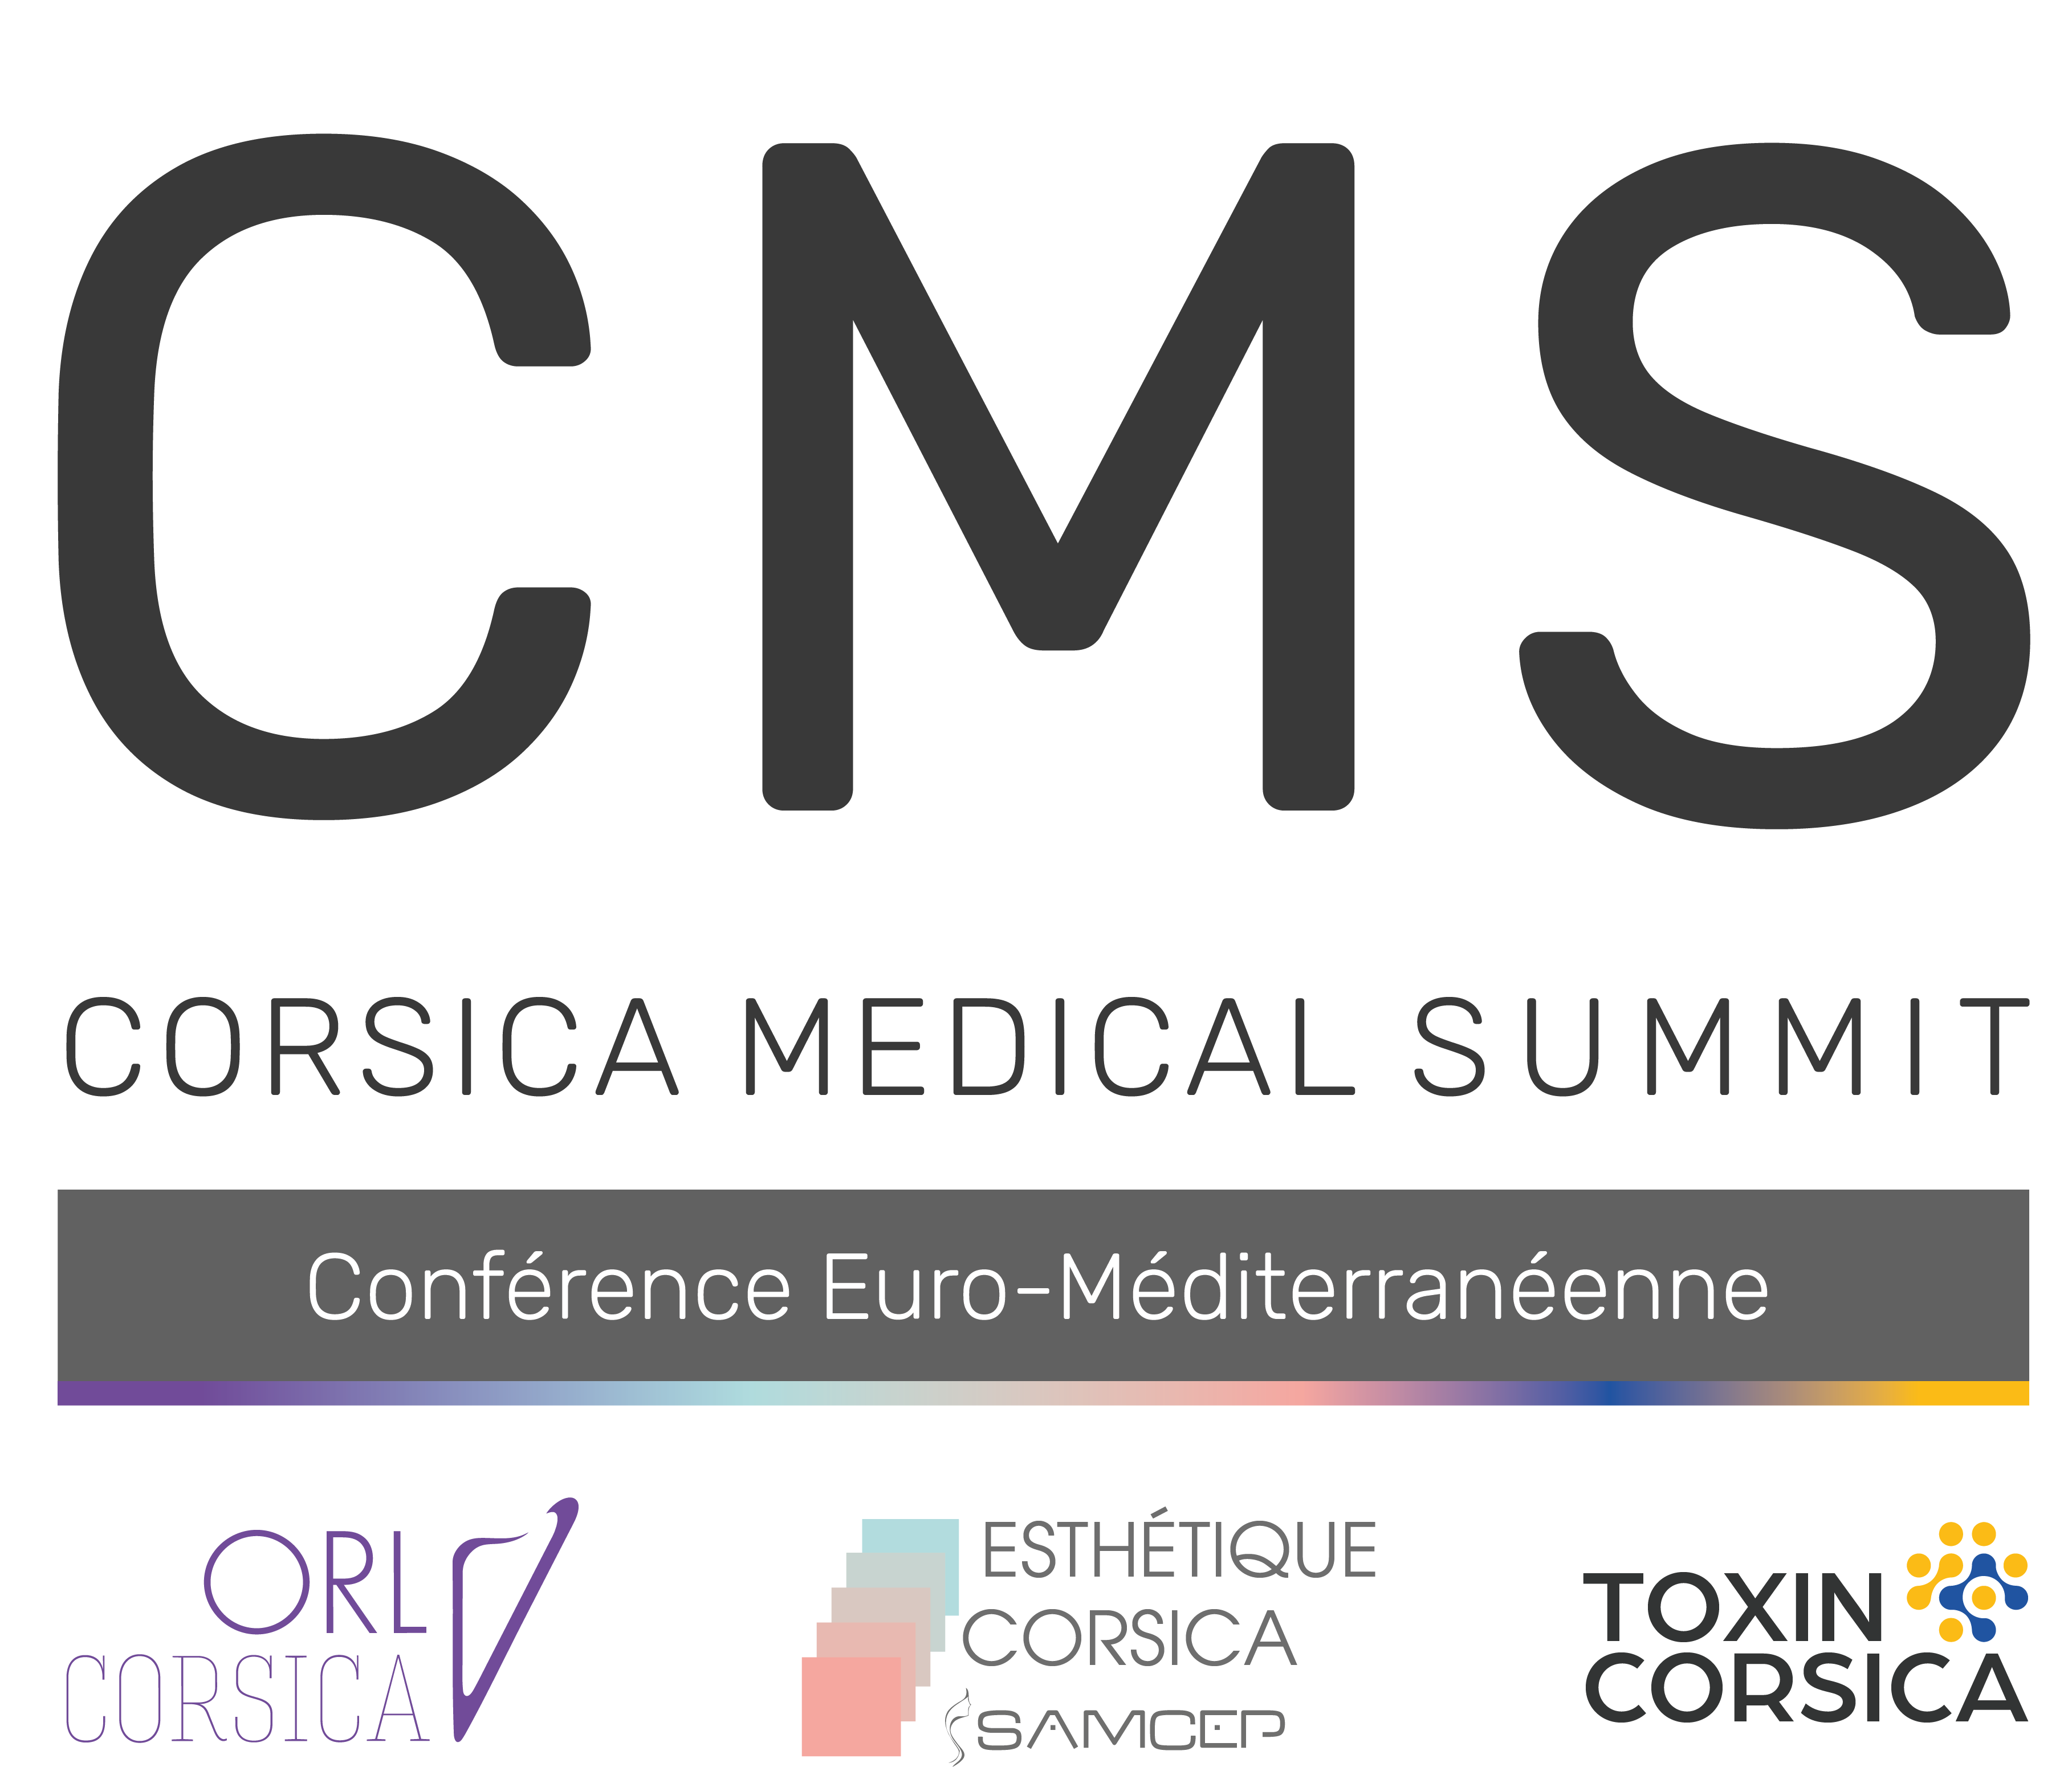 Corsica Medical Summit (CMS)